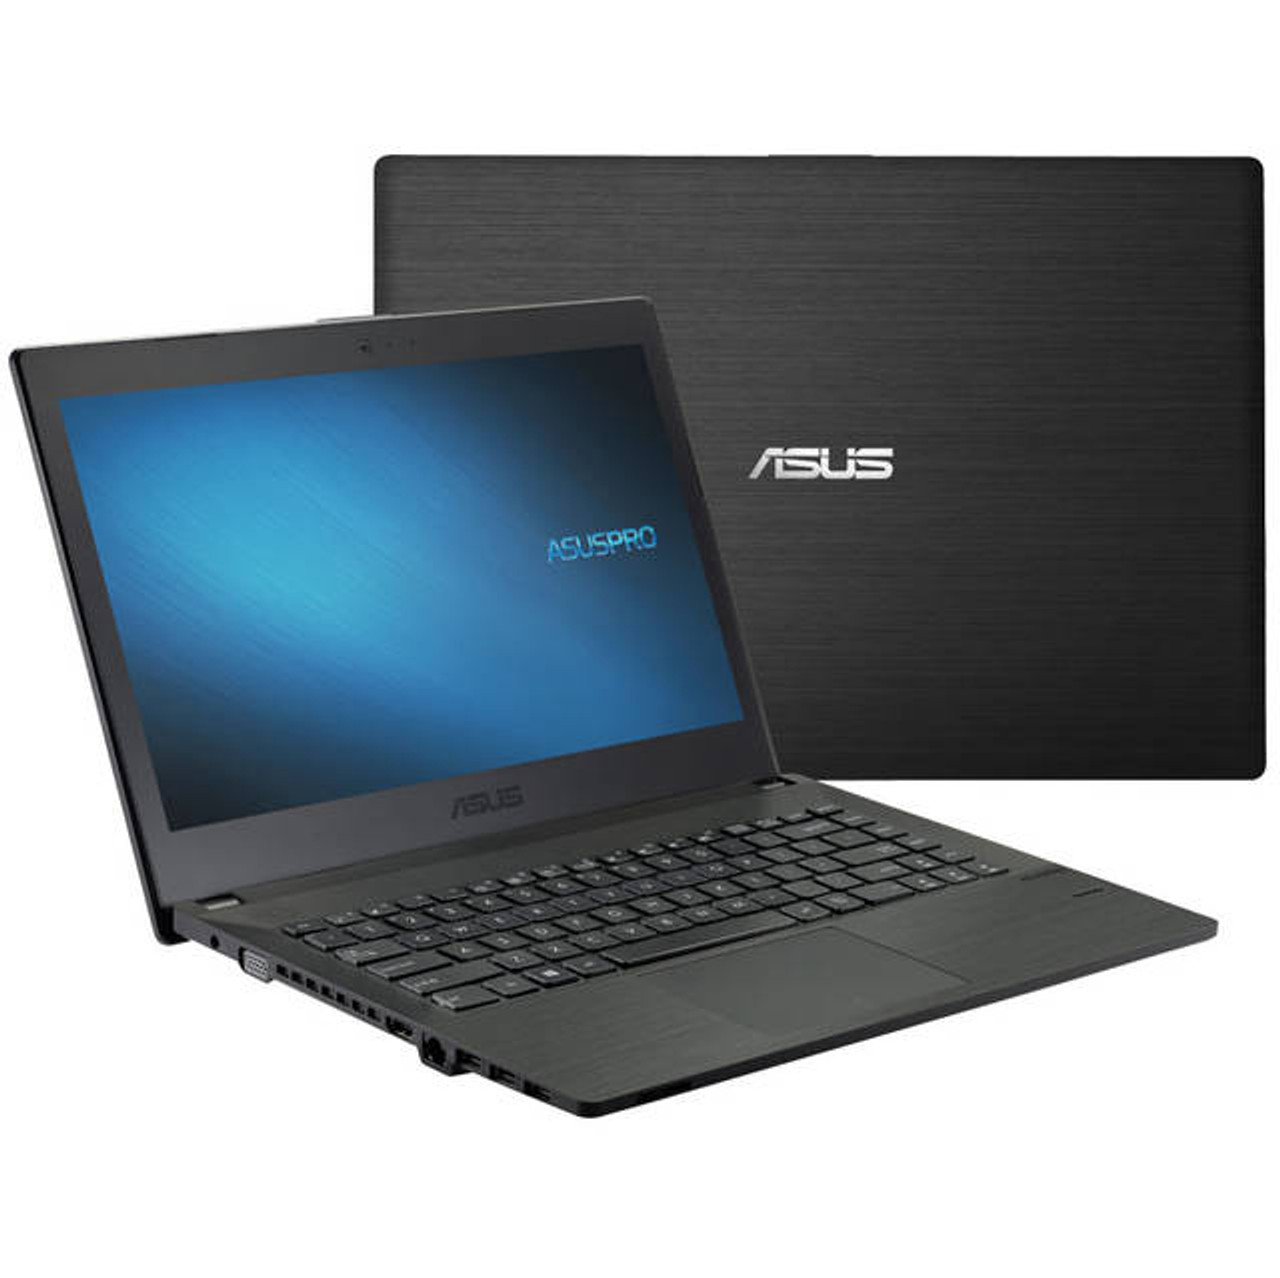 Asus ASUSPRO P2440UA-XS71 14.0 inch Intel Core i7-7500U 2.7GHz/ 8GB DDR4/ 256GB SSD + TPM/ DVD±RW/ USB3.0/ Windows 10 Professional Notebook (Black)